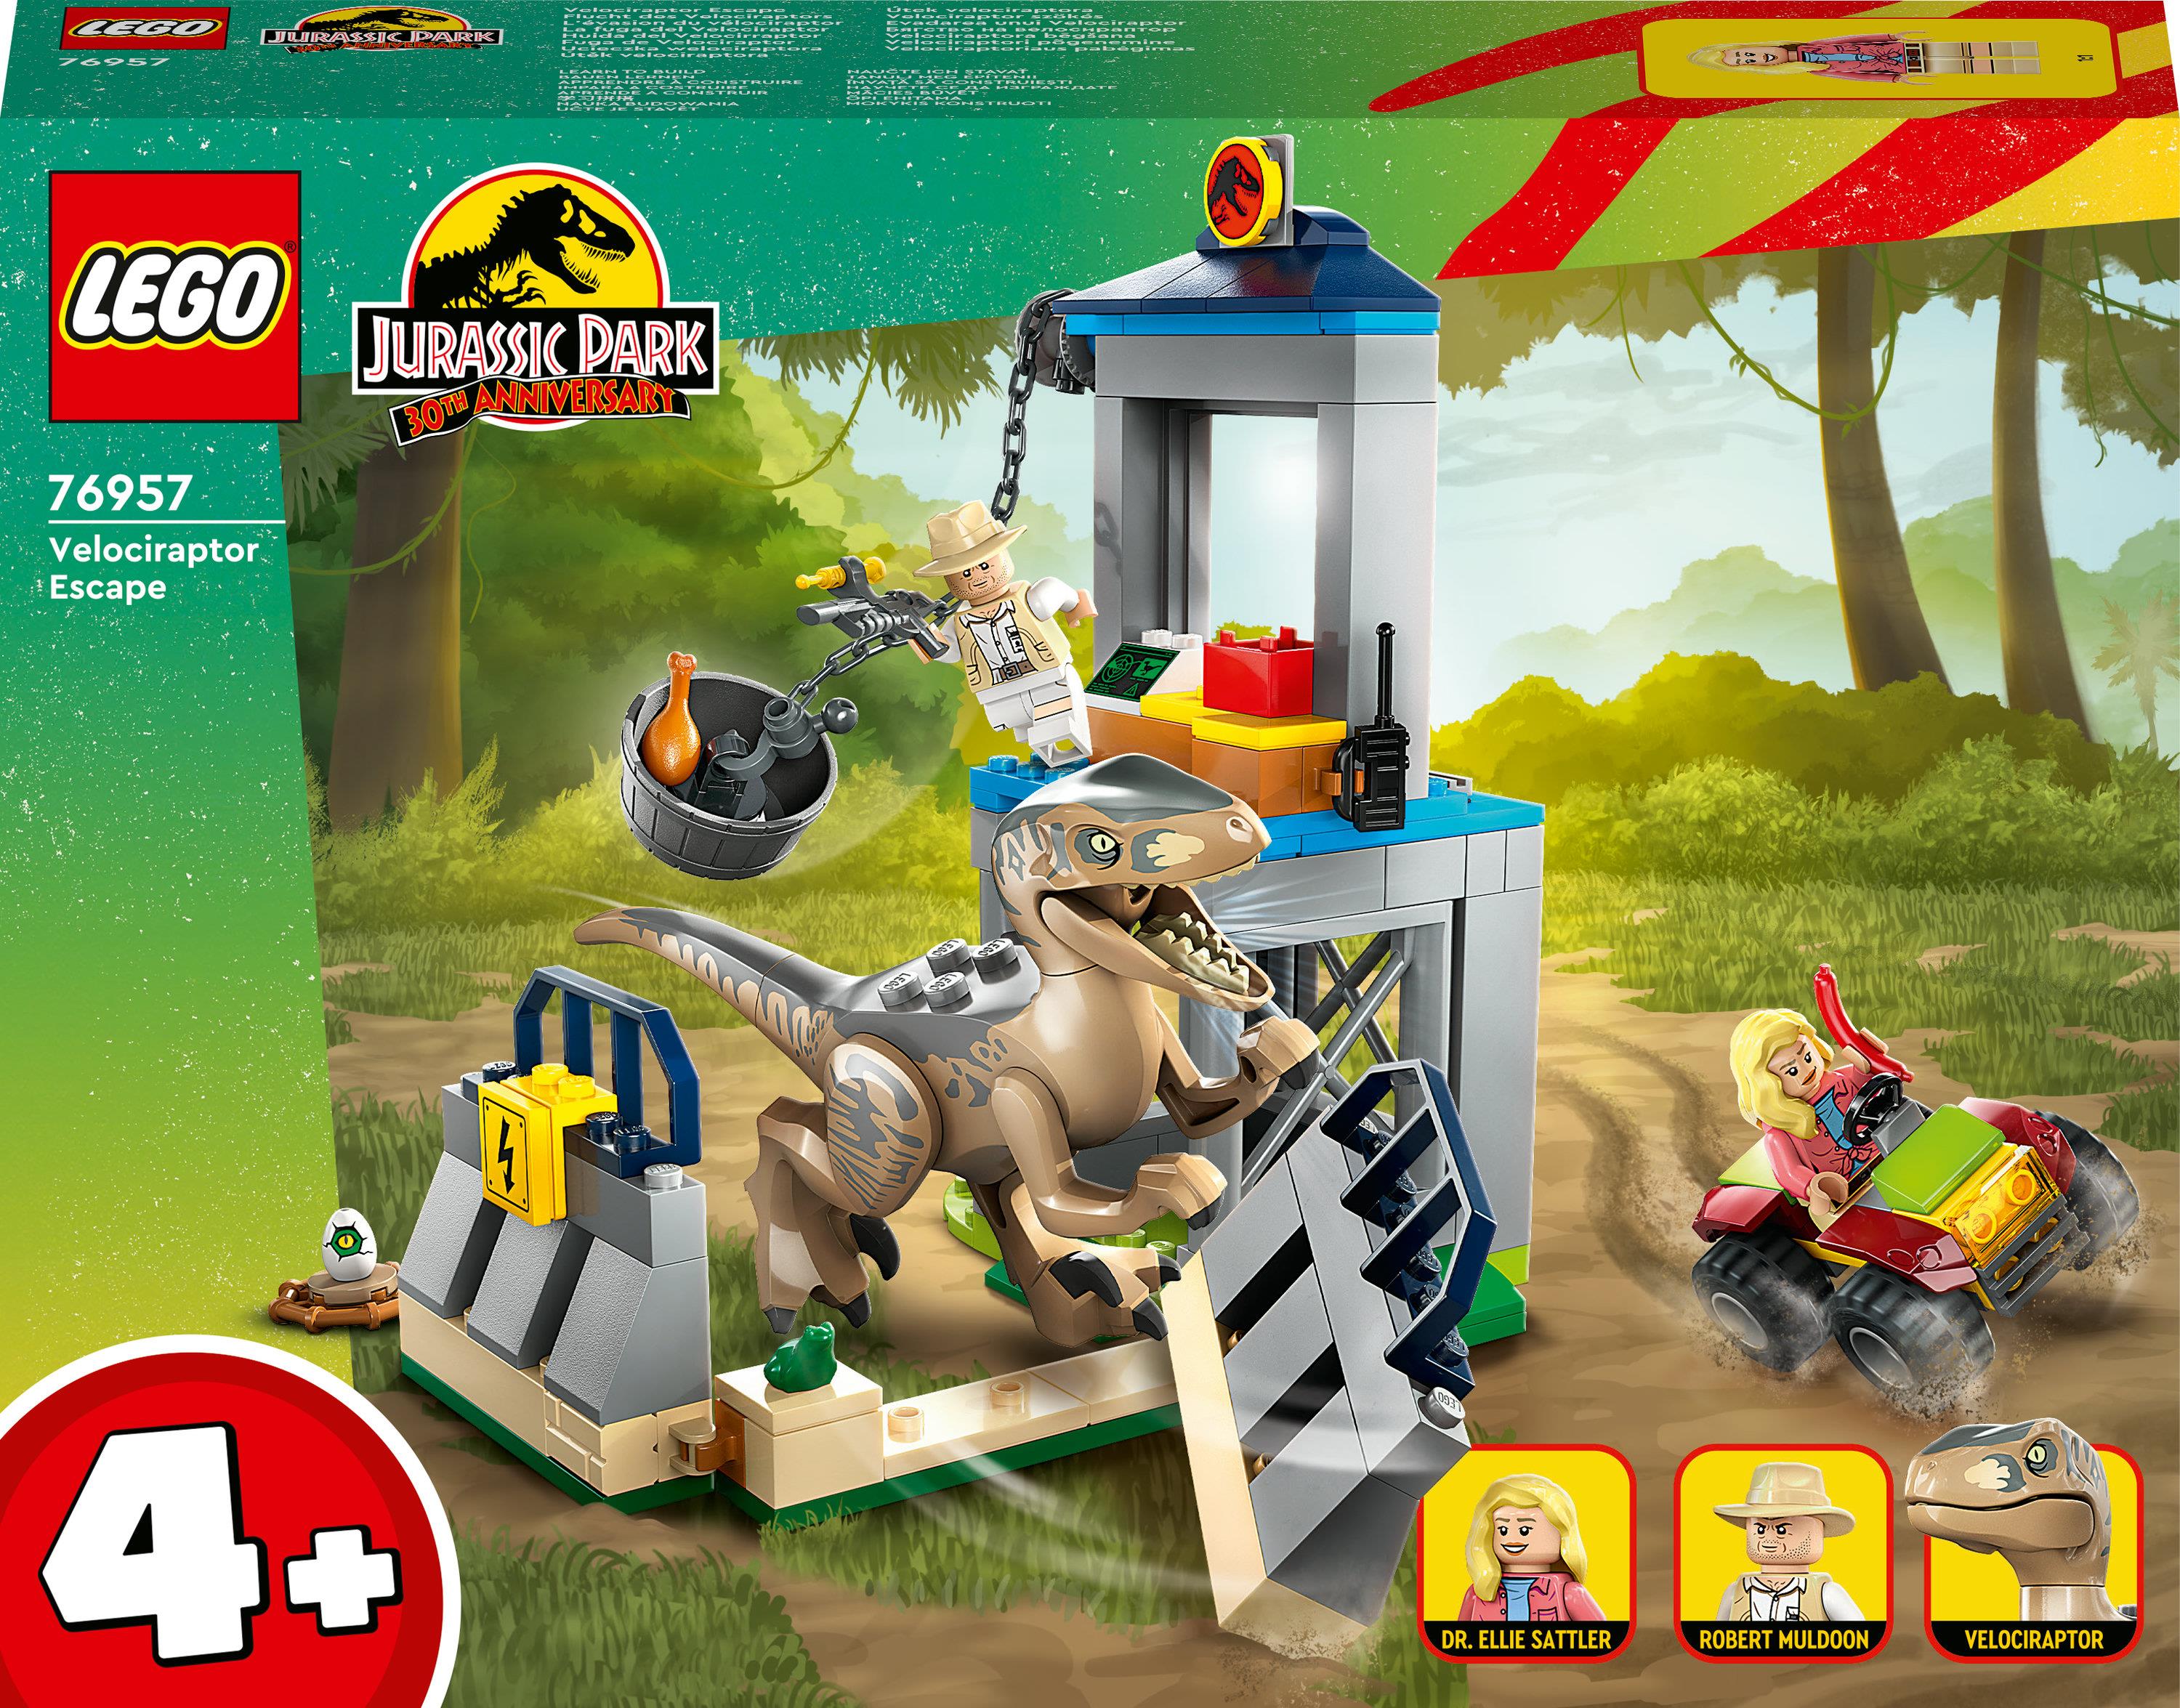 LEGO Jurassic Park 76957